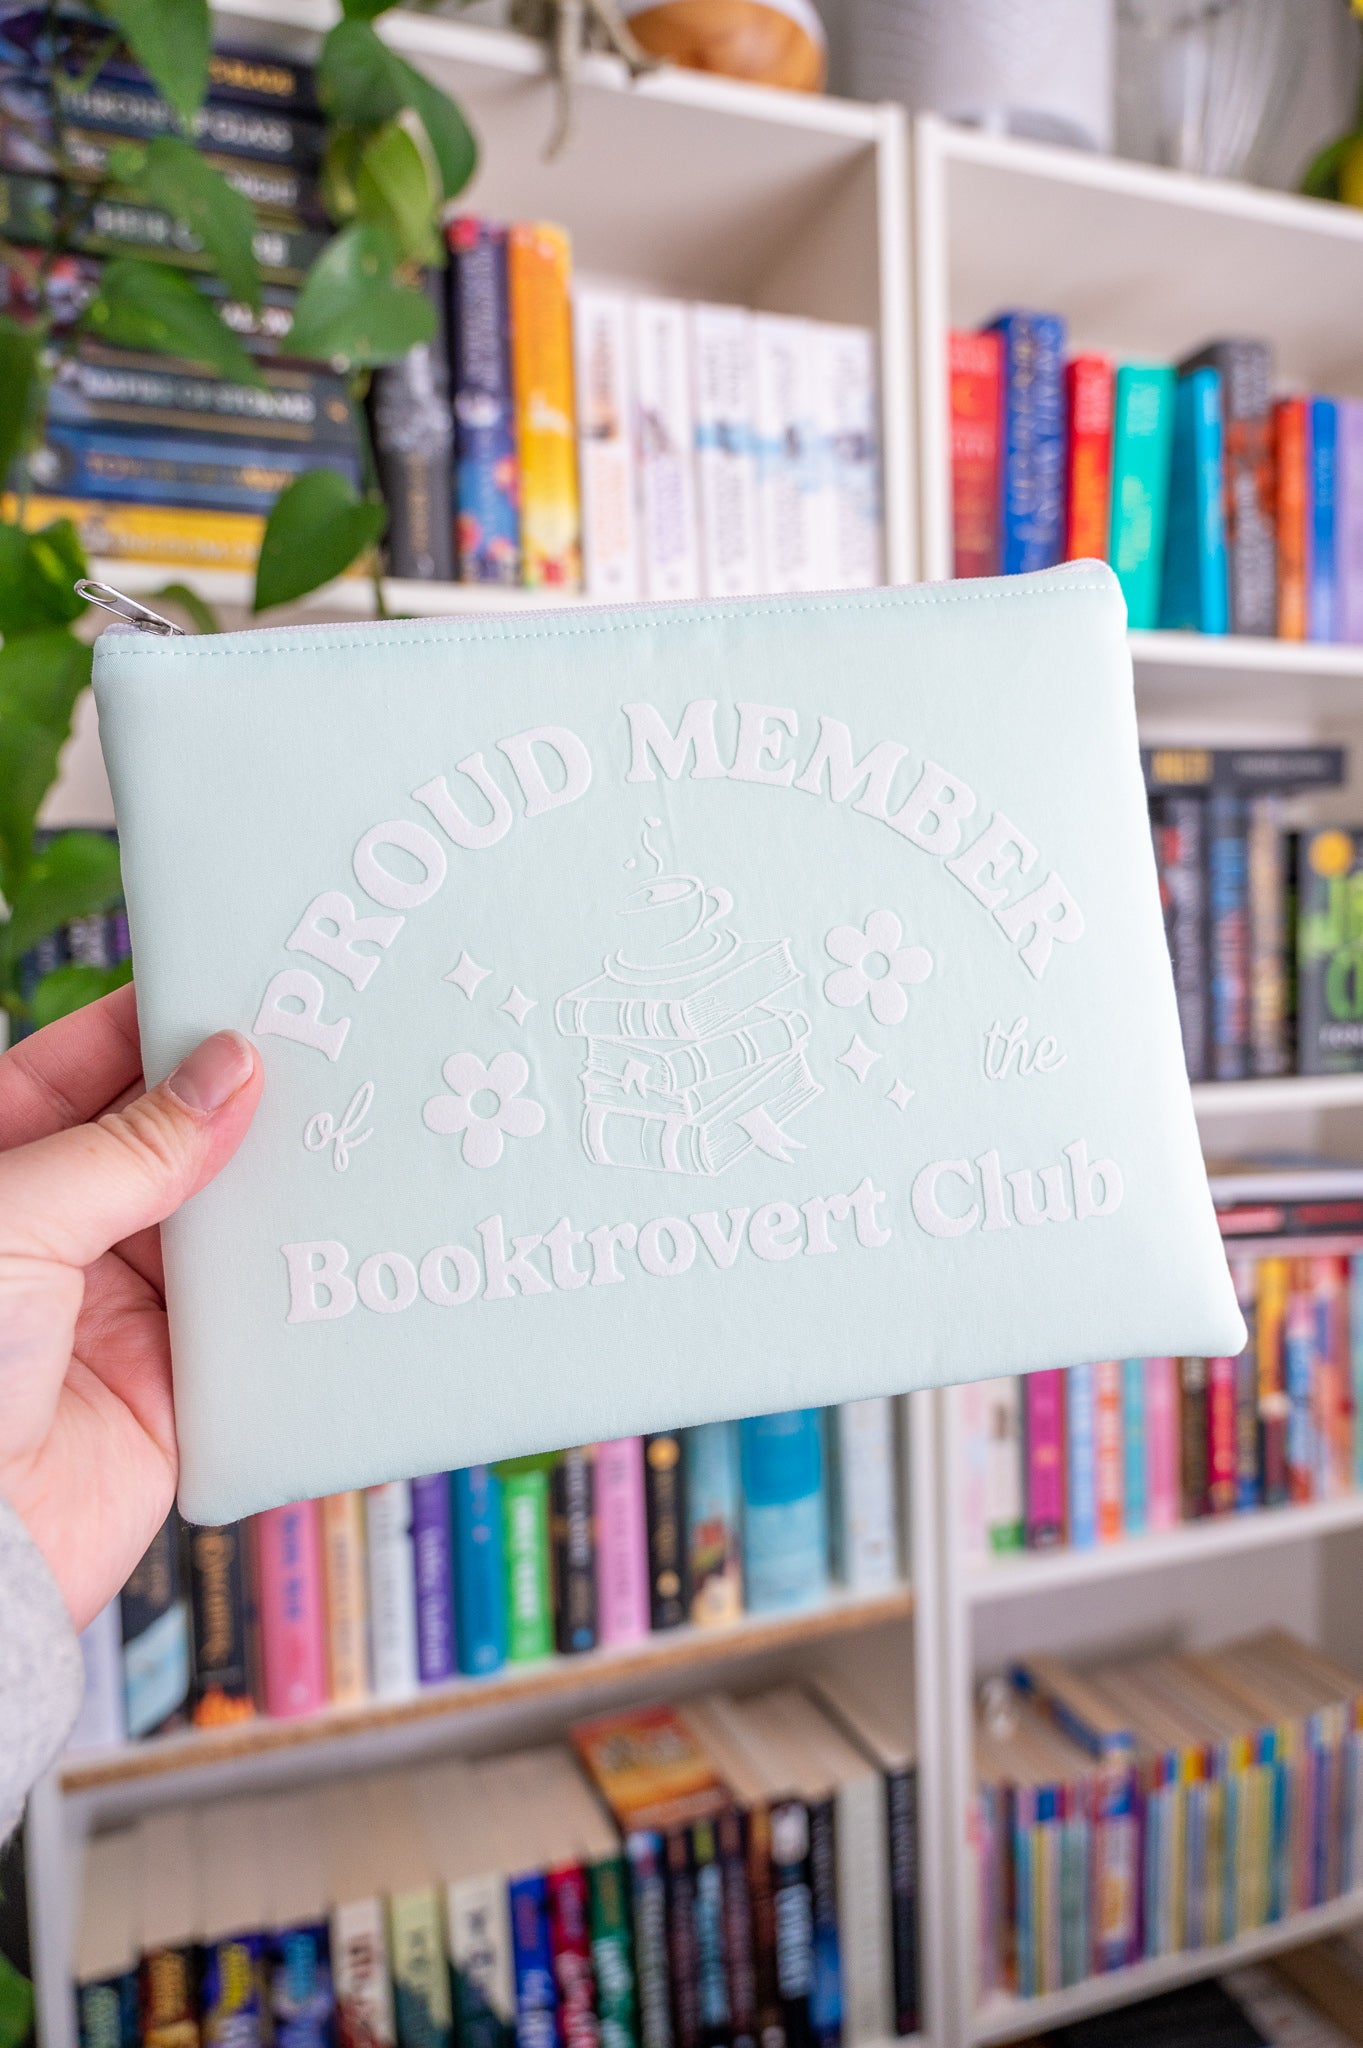 Booktrovert Club Kindle Sleeve